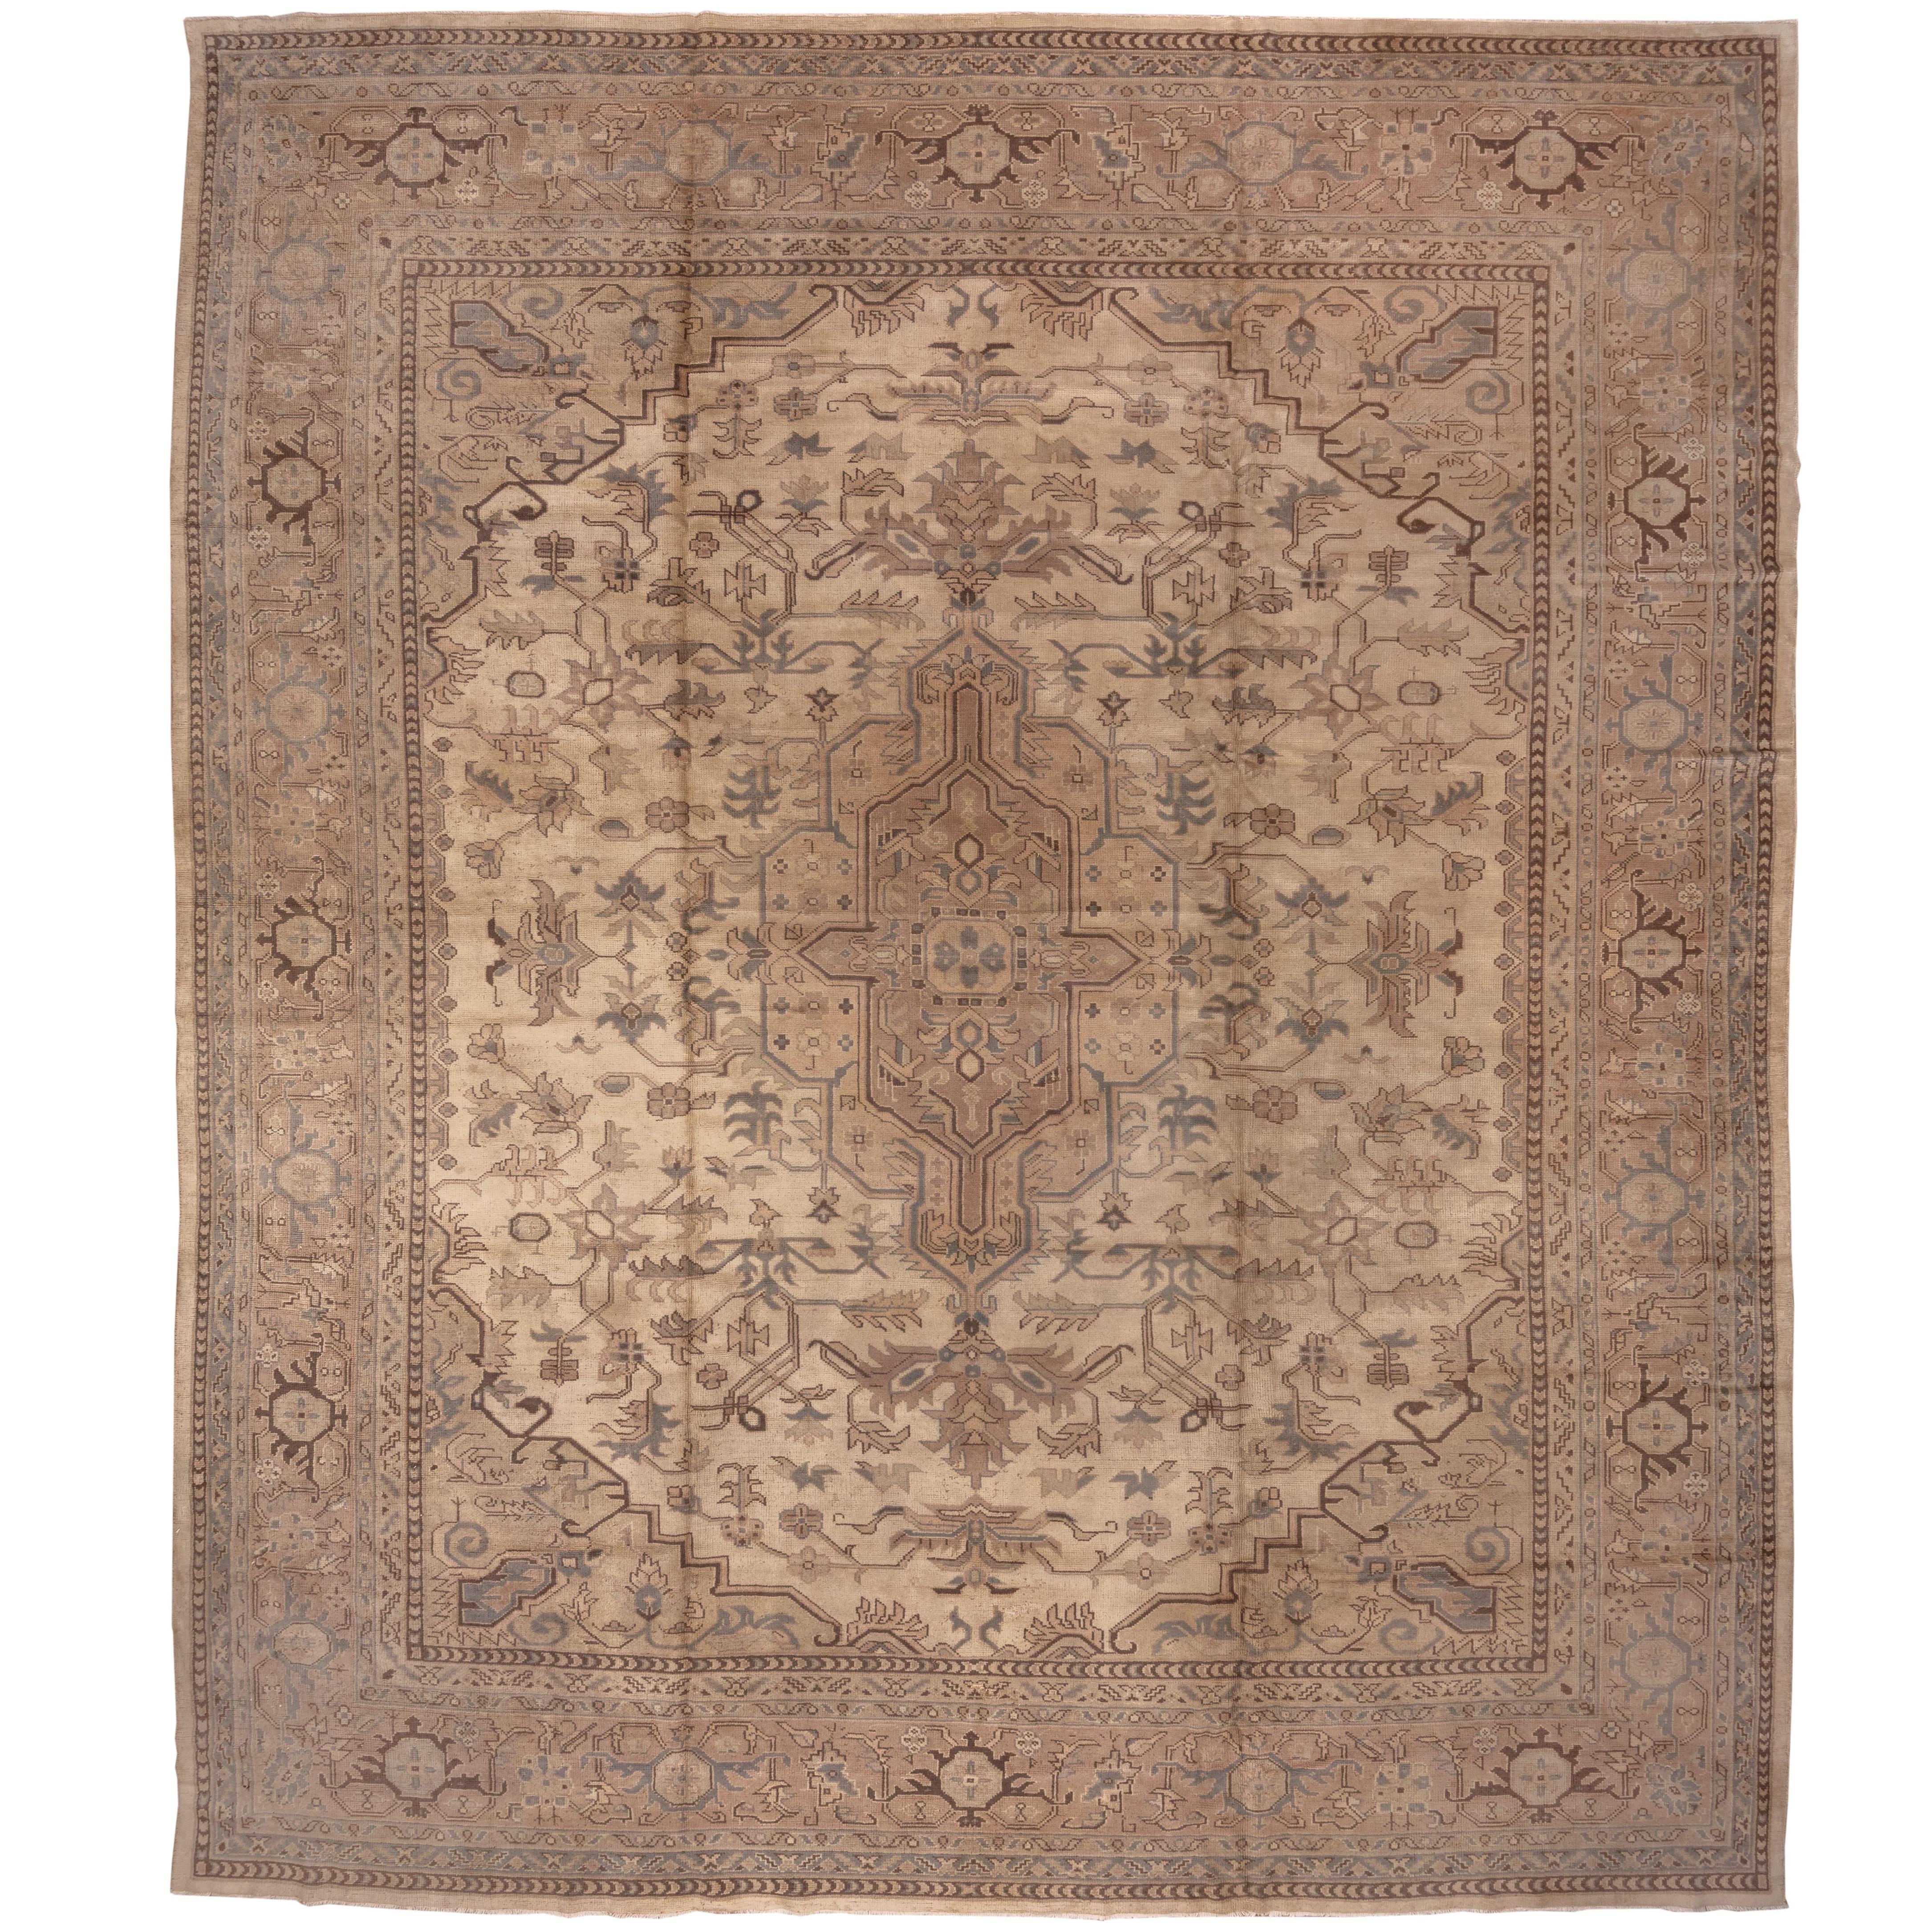 Geometric Antique Oushak Carpet